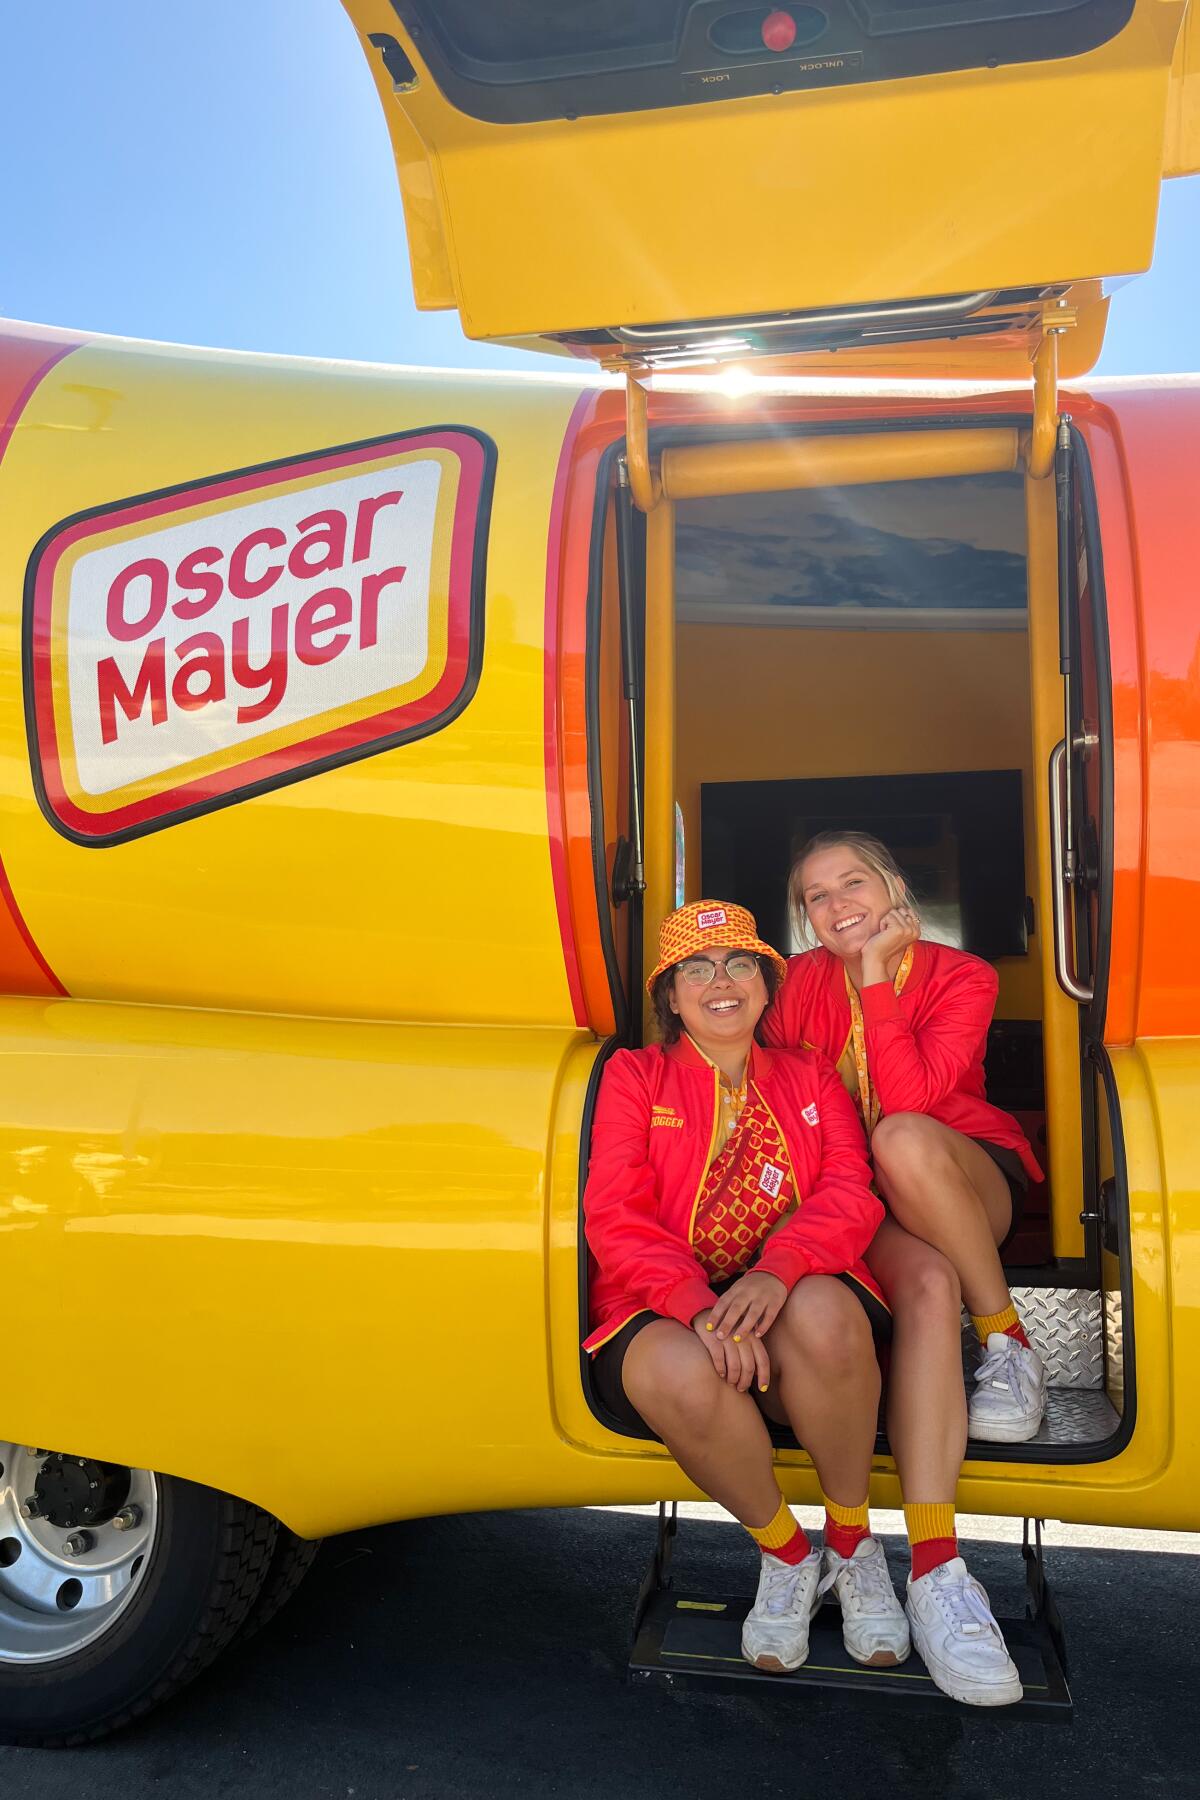 Two women sit on the steps of an open side of the Oscar Mayer Wienermobile.